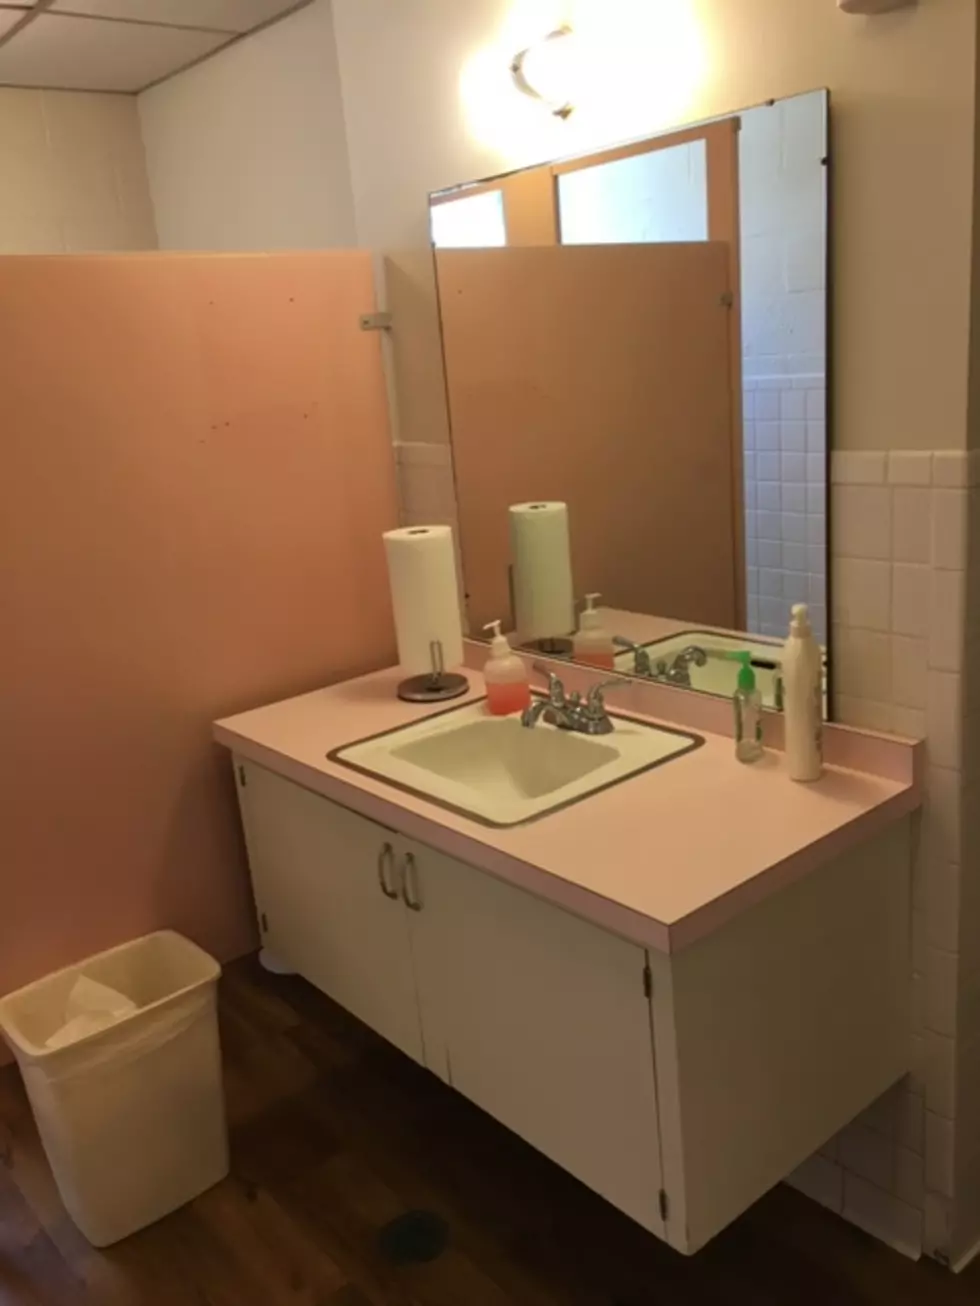 Bathroom Renovation: Will You Help us Choose? [SPONSORED]